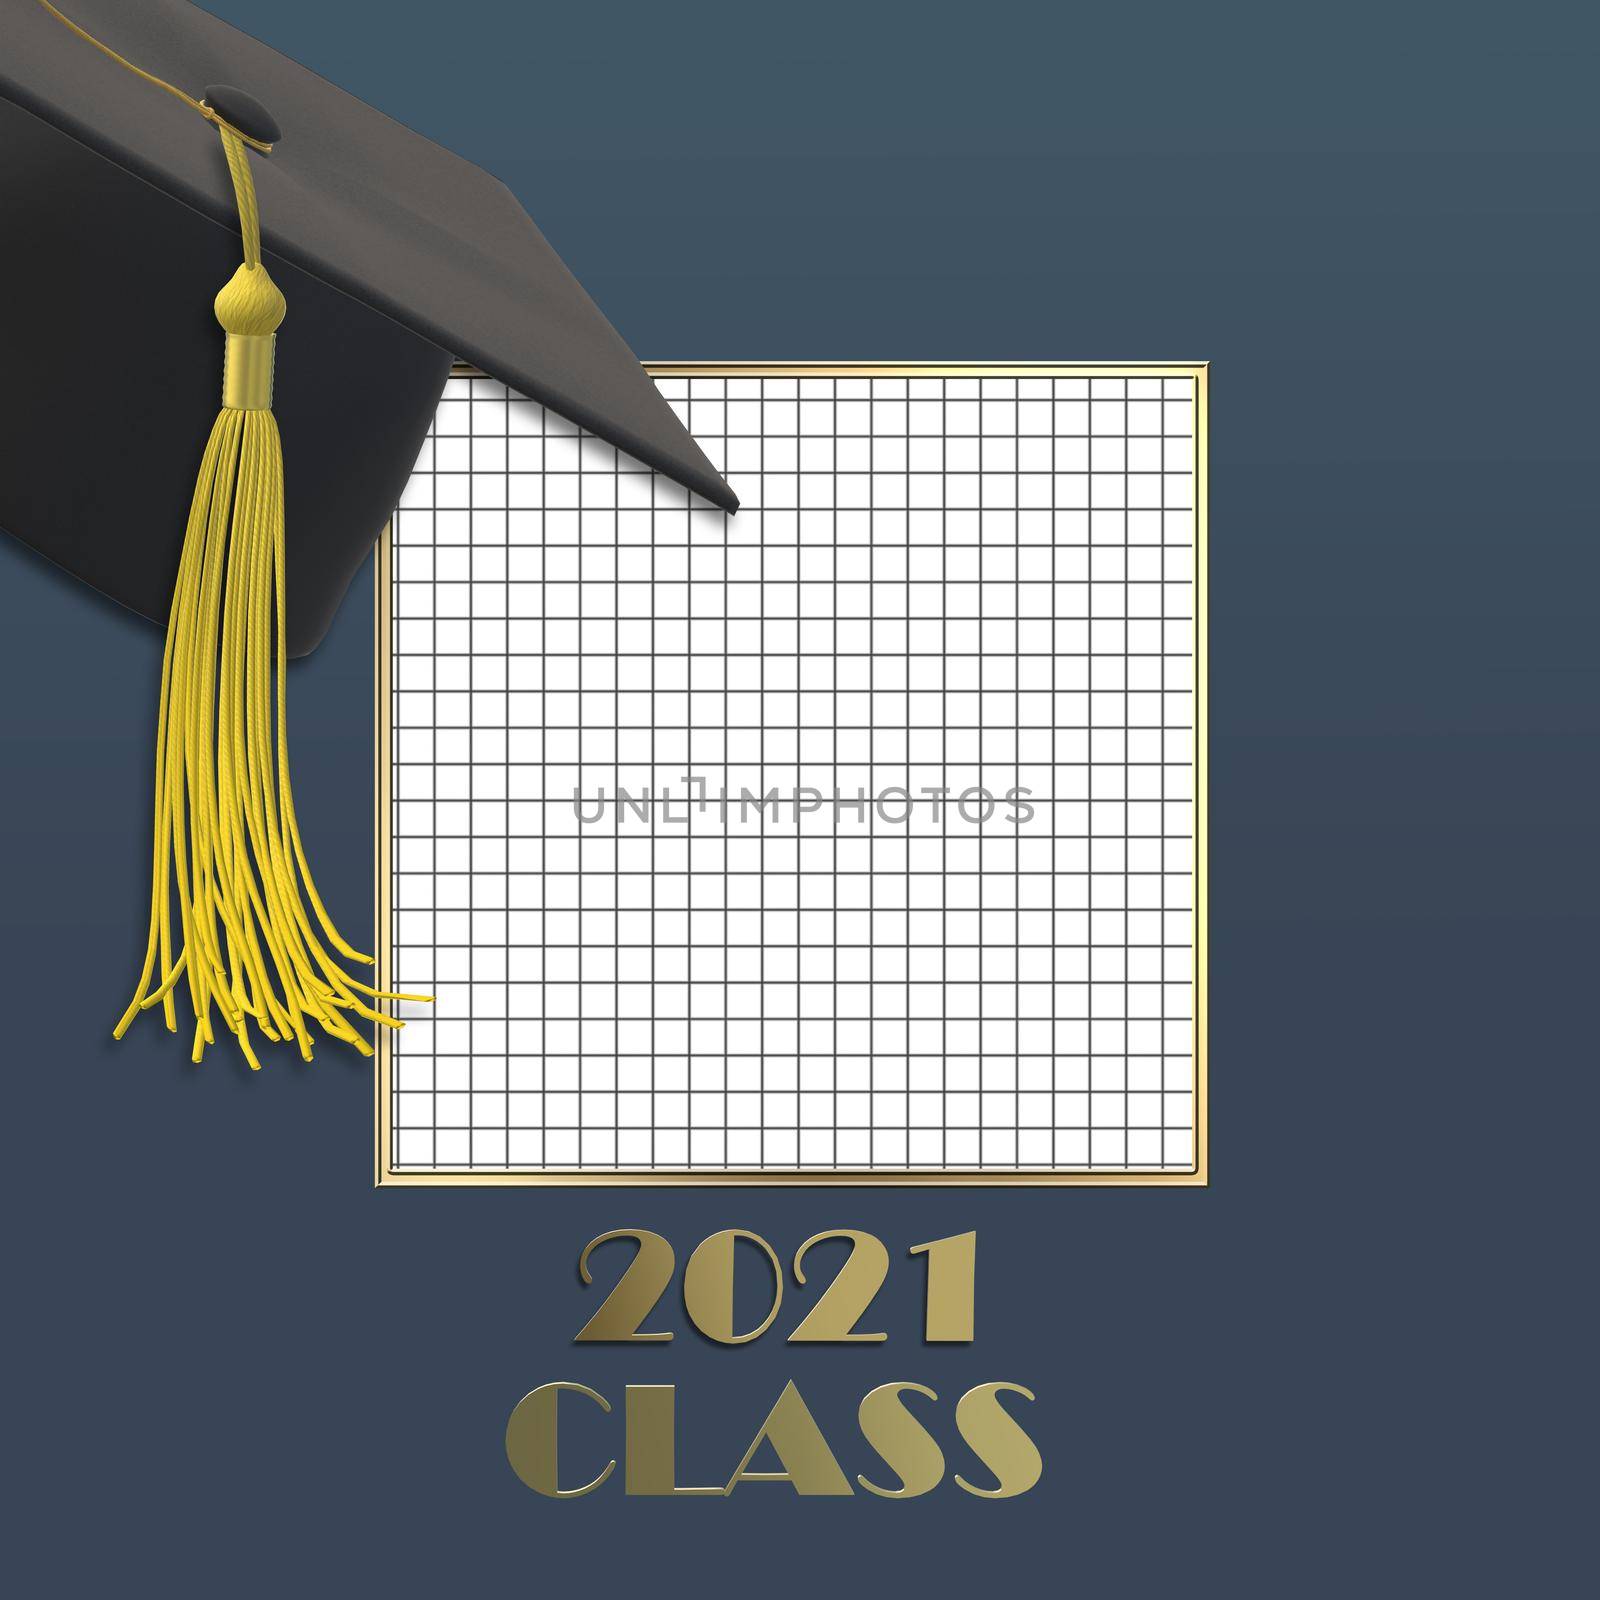 Graduation 2021 cap with tassel by NelliPolk